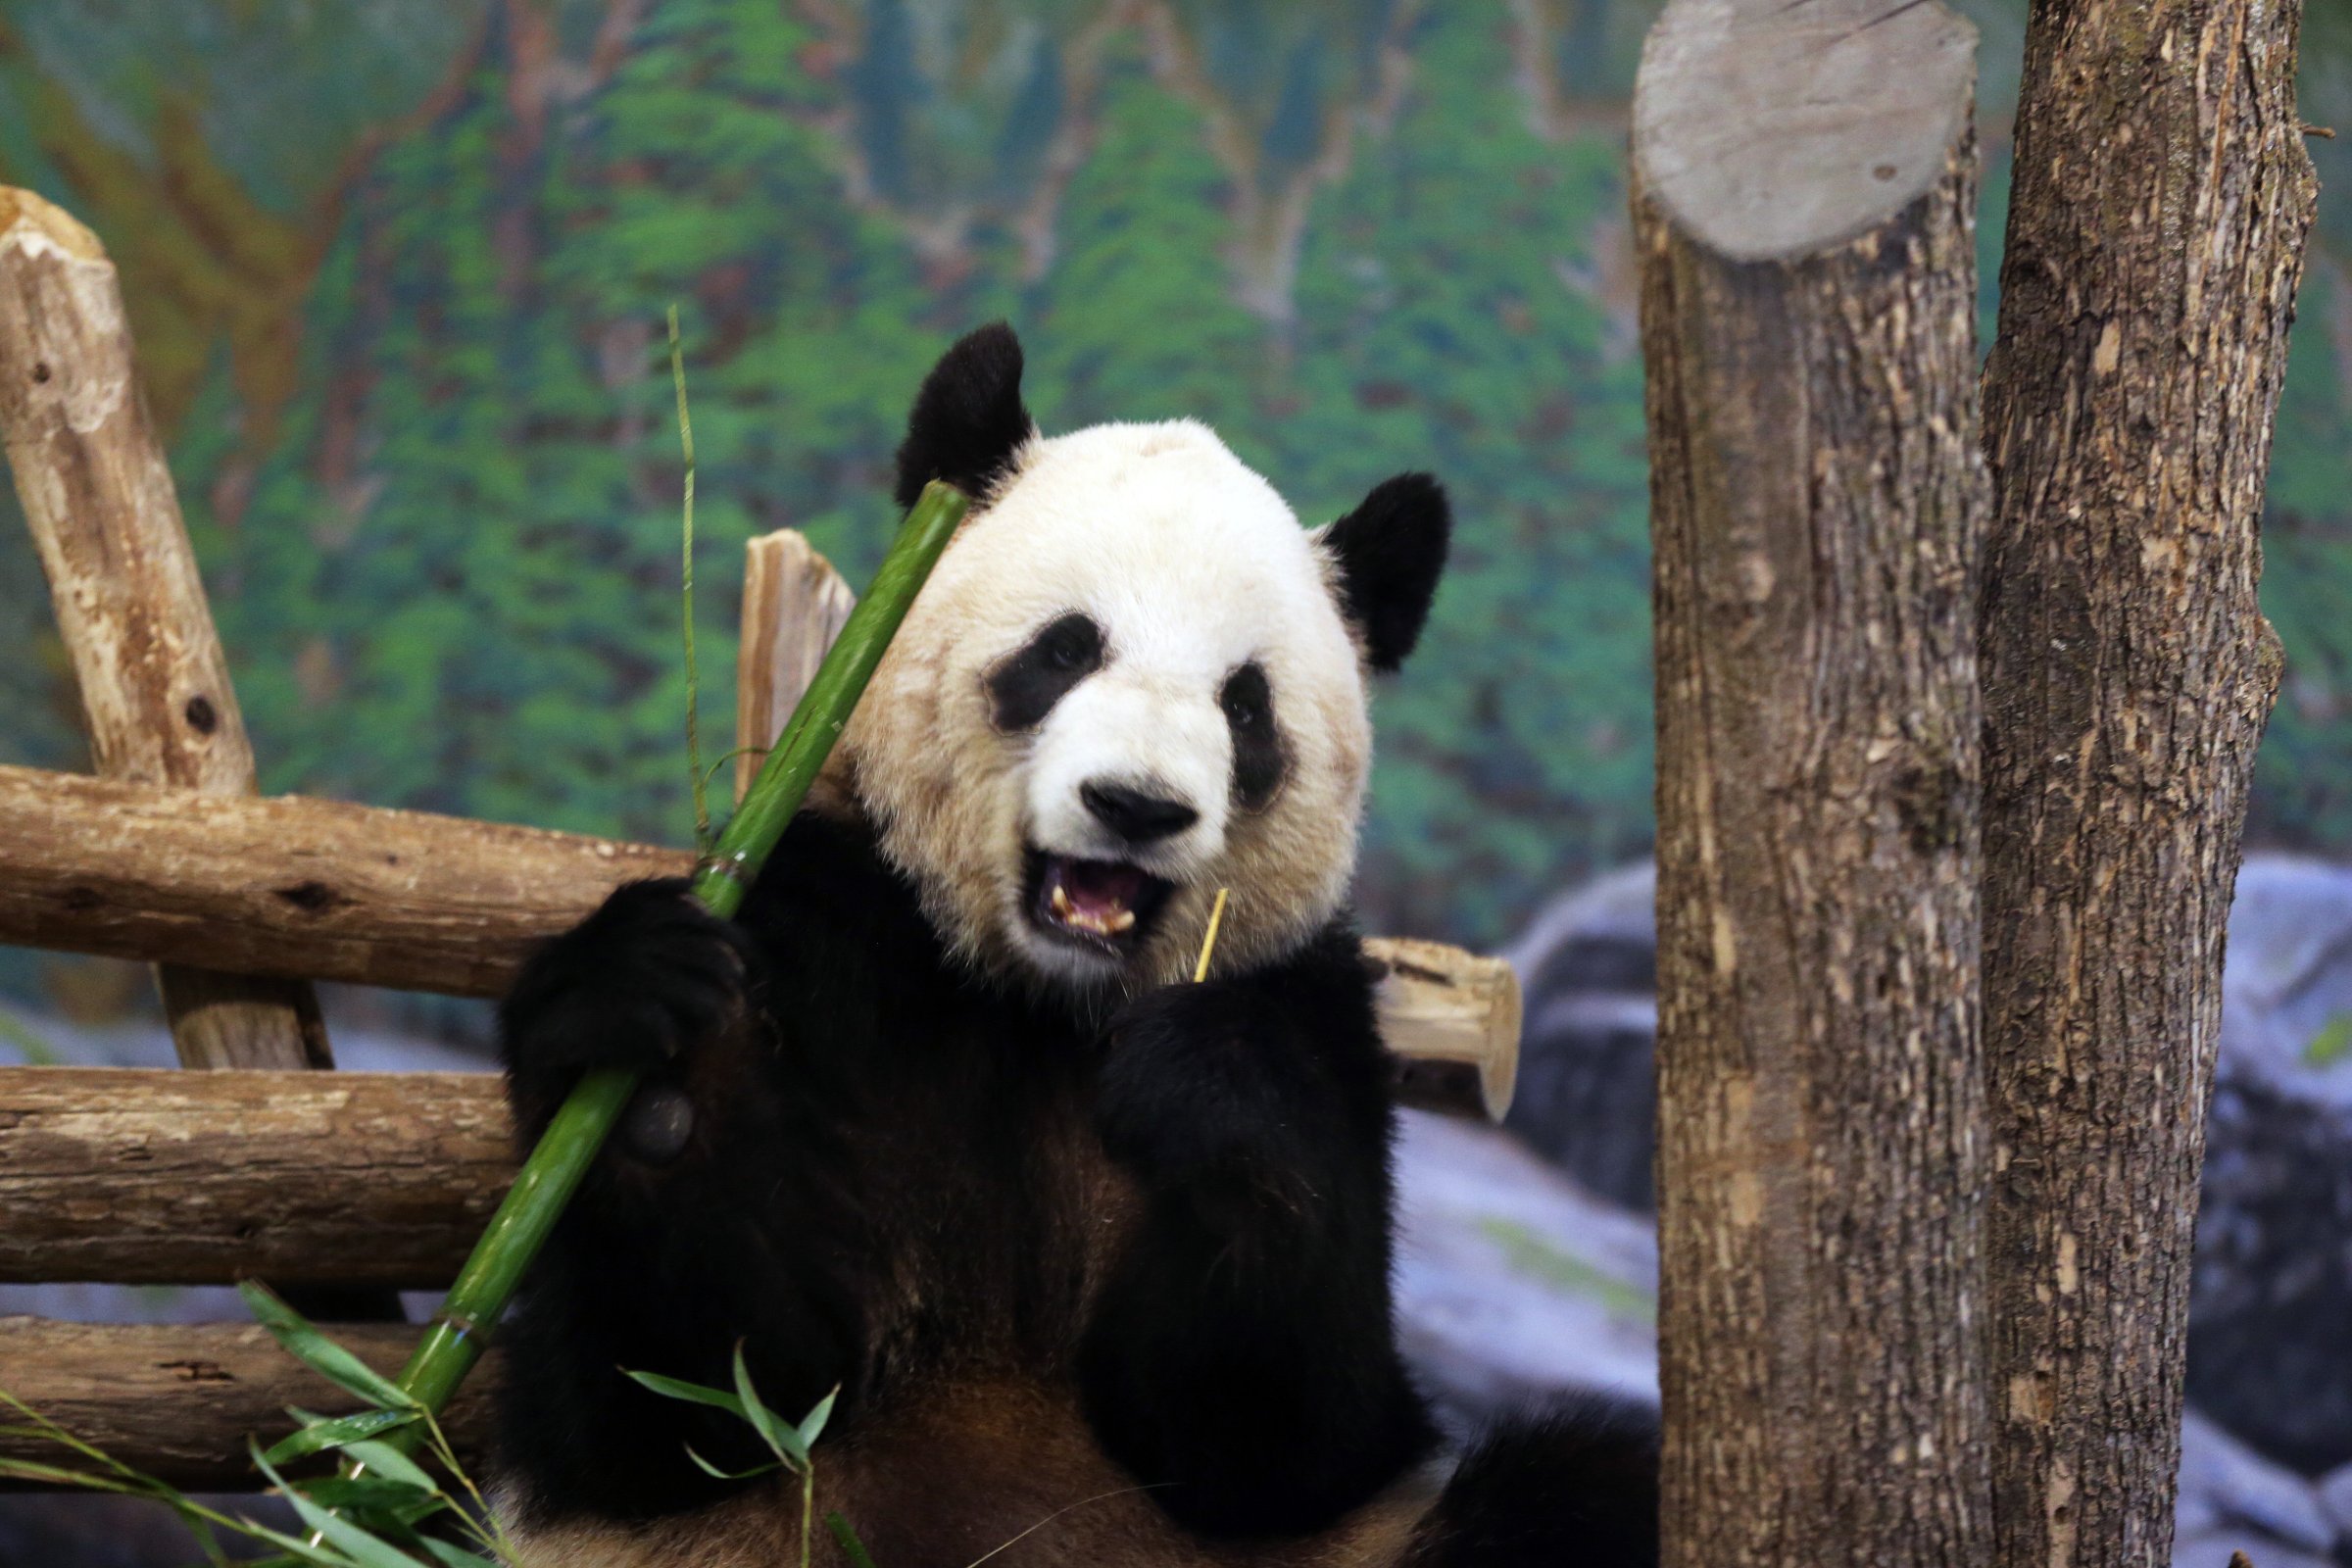 Panda Er Shun at the Toronto Zoo on April 29, 2014.